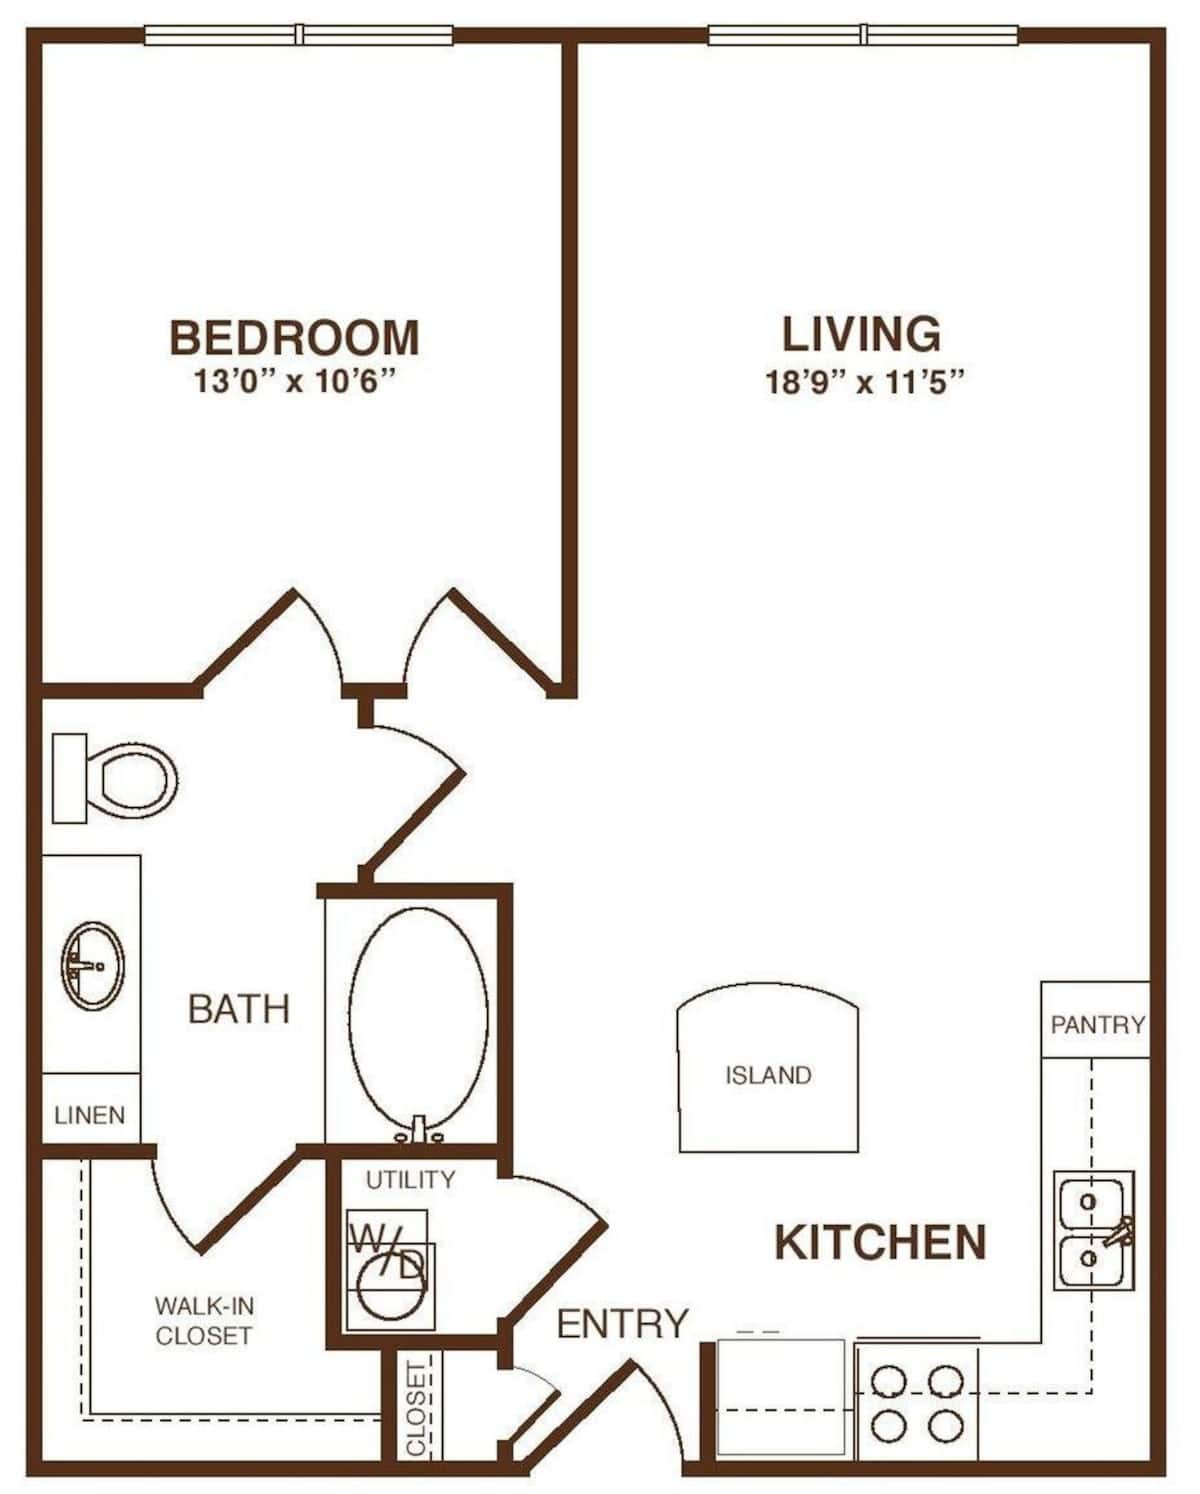 Floorplan diagram for The Chelsea, showing 1 bedroom